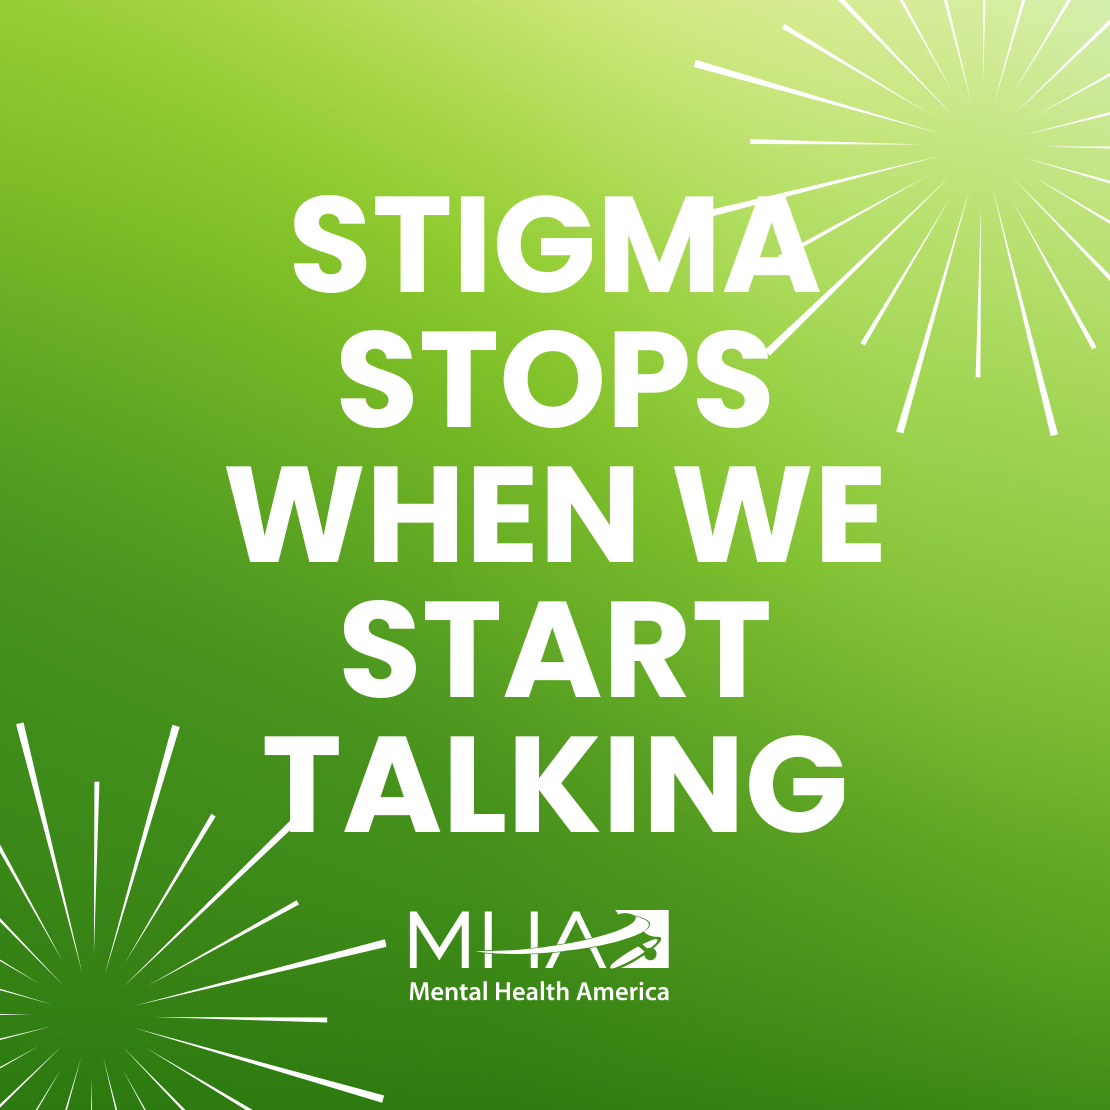 Stigma stops when we start talking